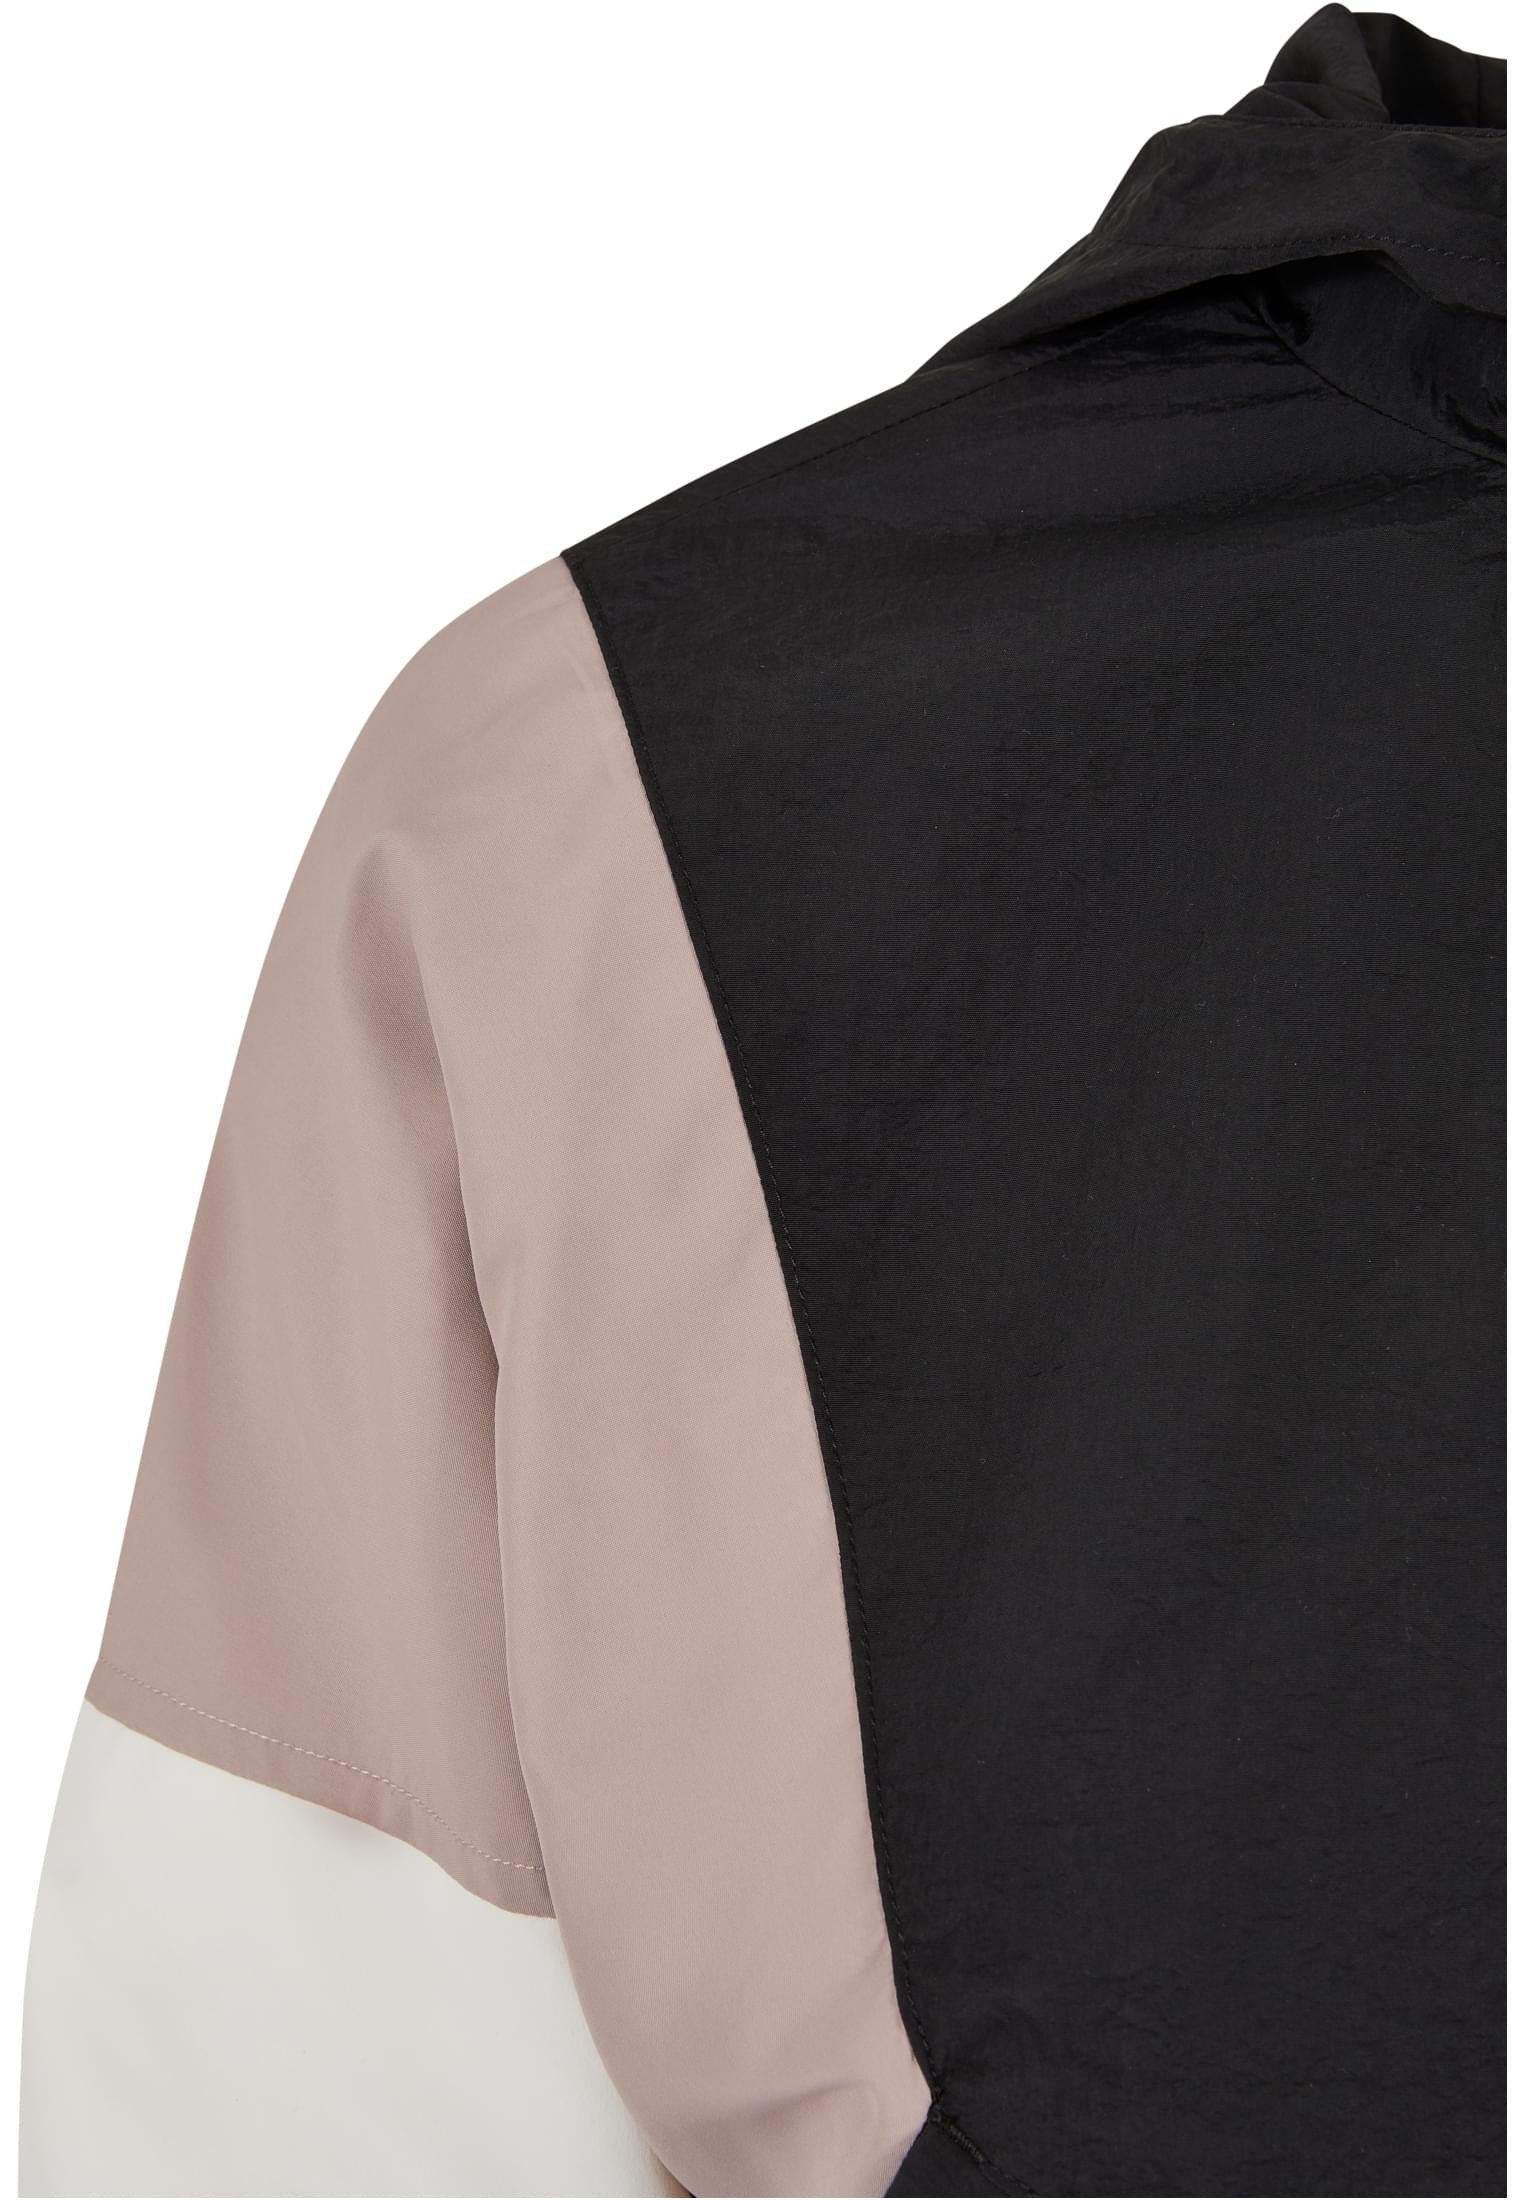 URBAN CLASSICS Short (1-St) black/duskrose/whitesand Crinkle Jacket 3-Tone Damen Outdoorjacke Ladies